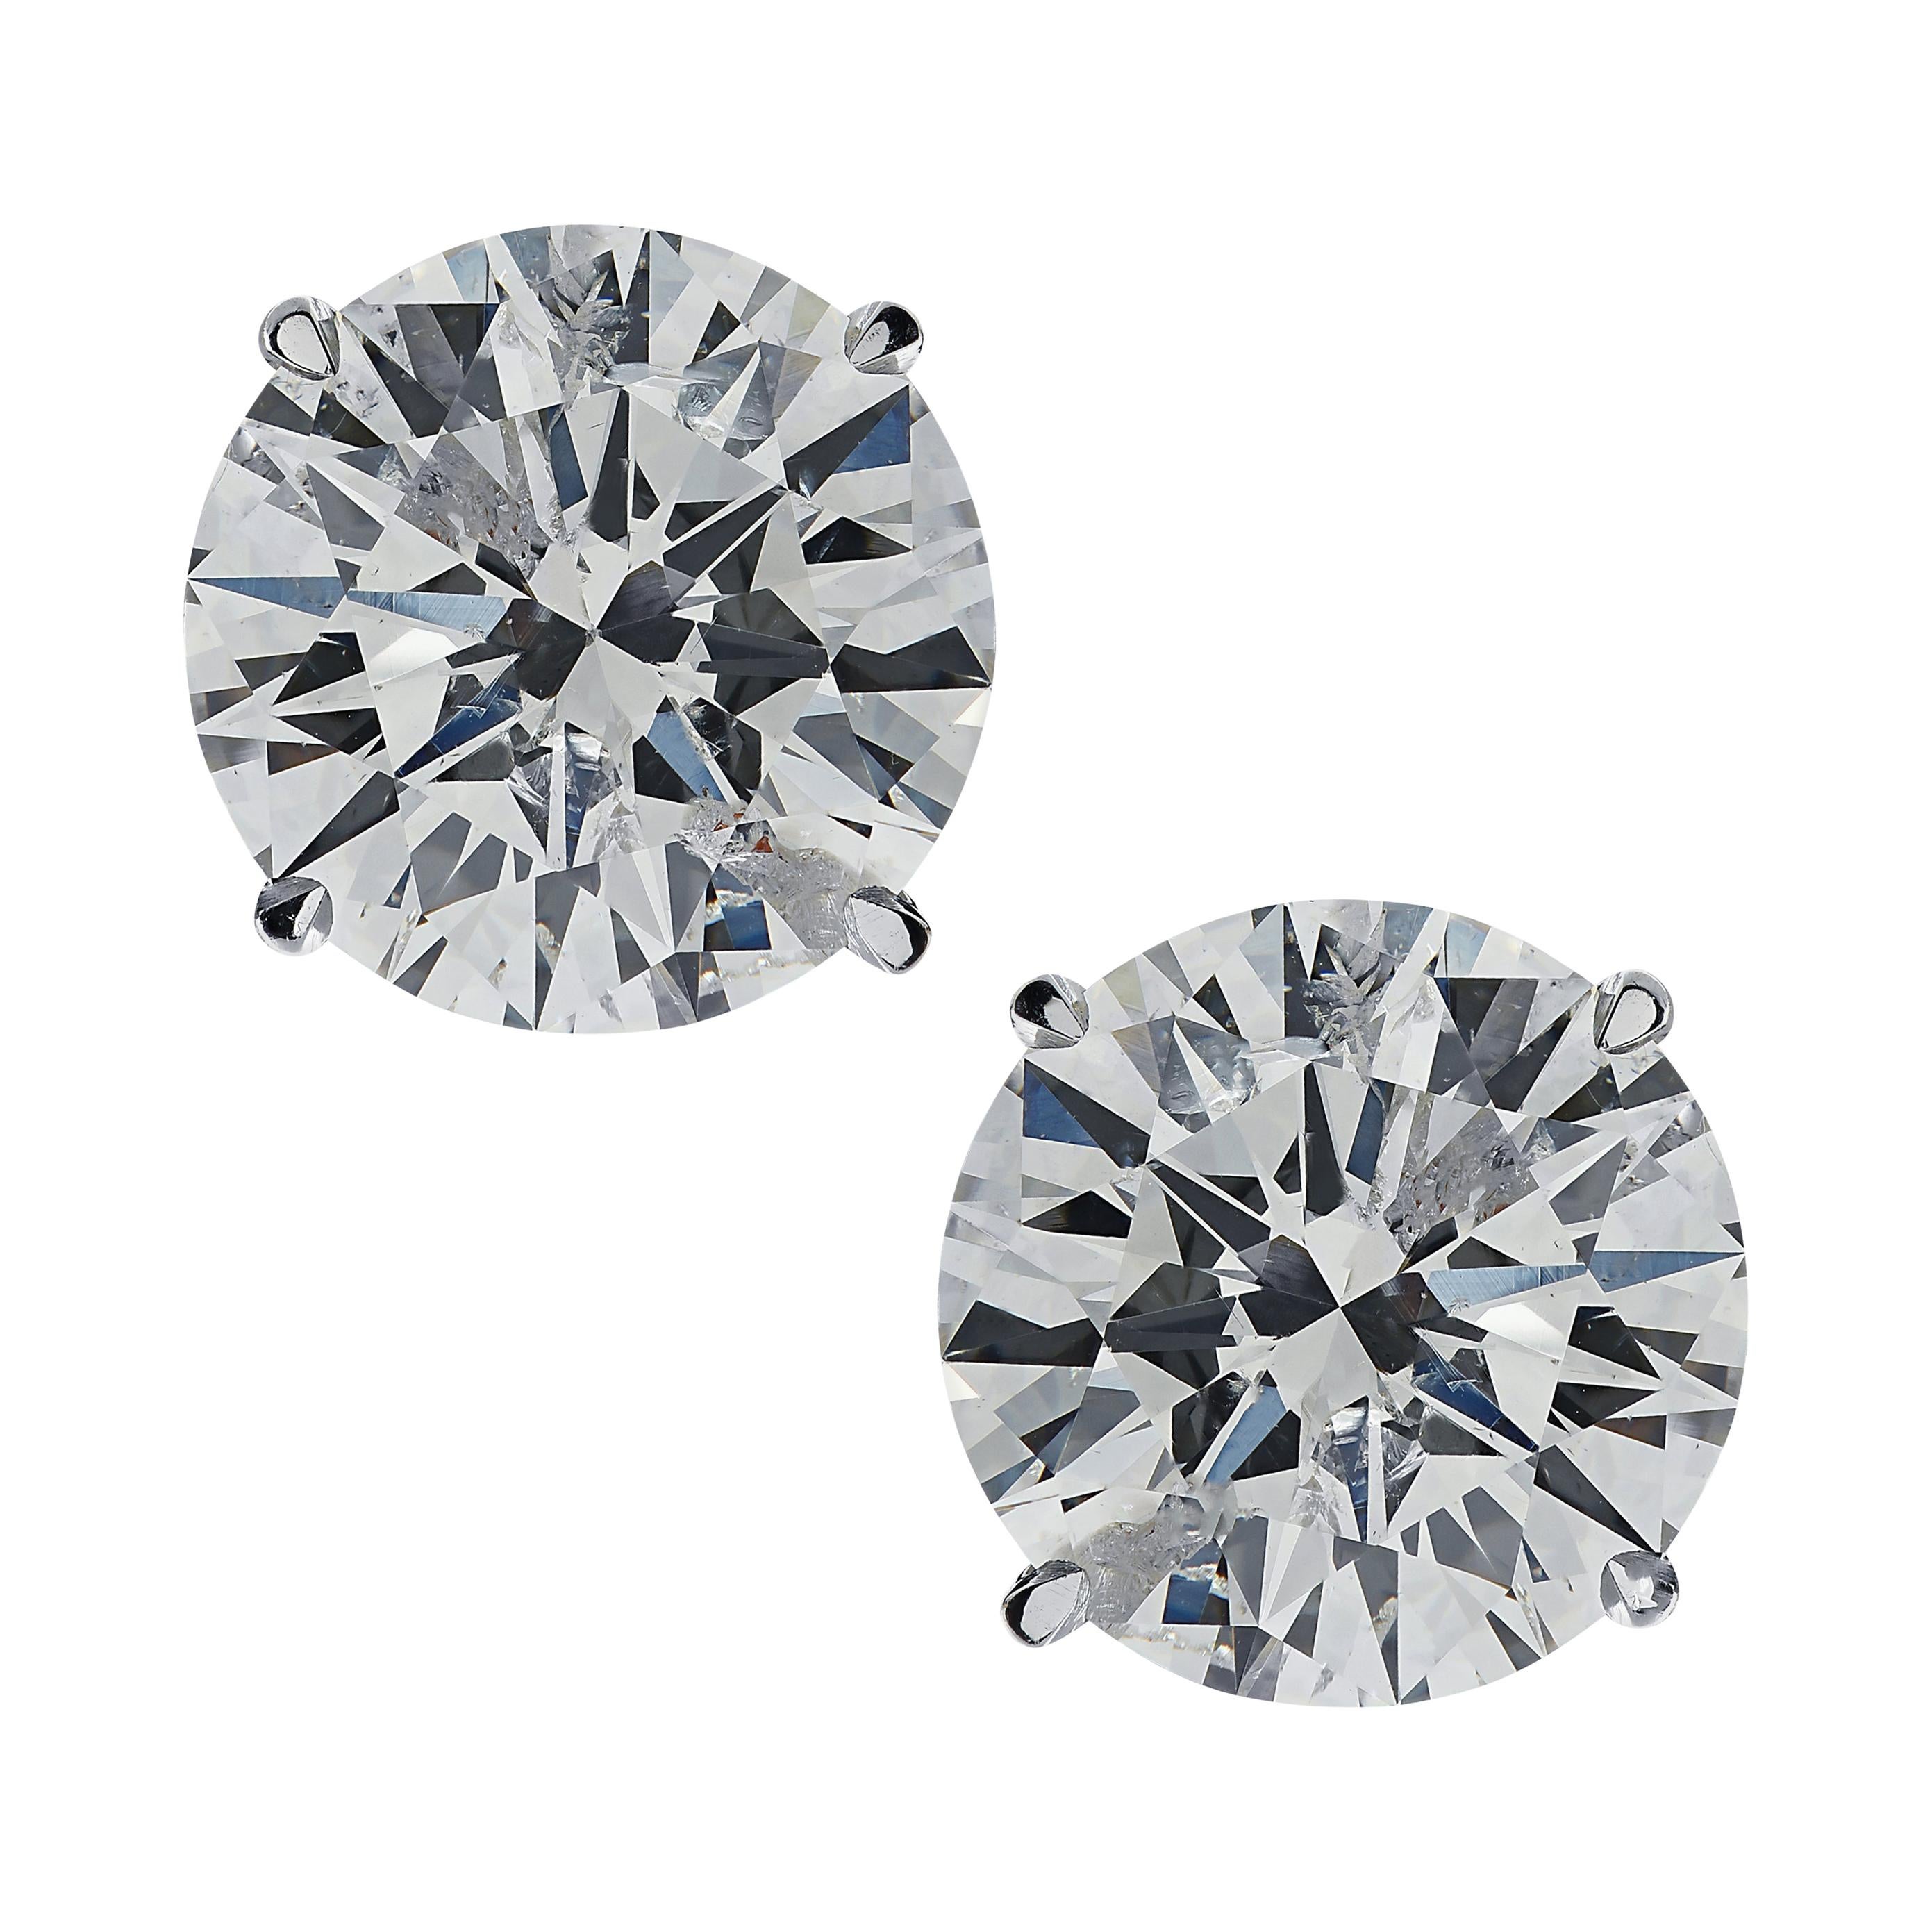 Vivid Diamonds 4.04 Carat Diamond Solitaire Stud Earrings